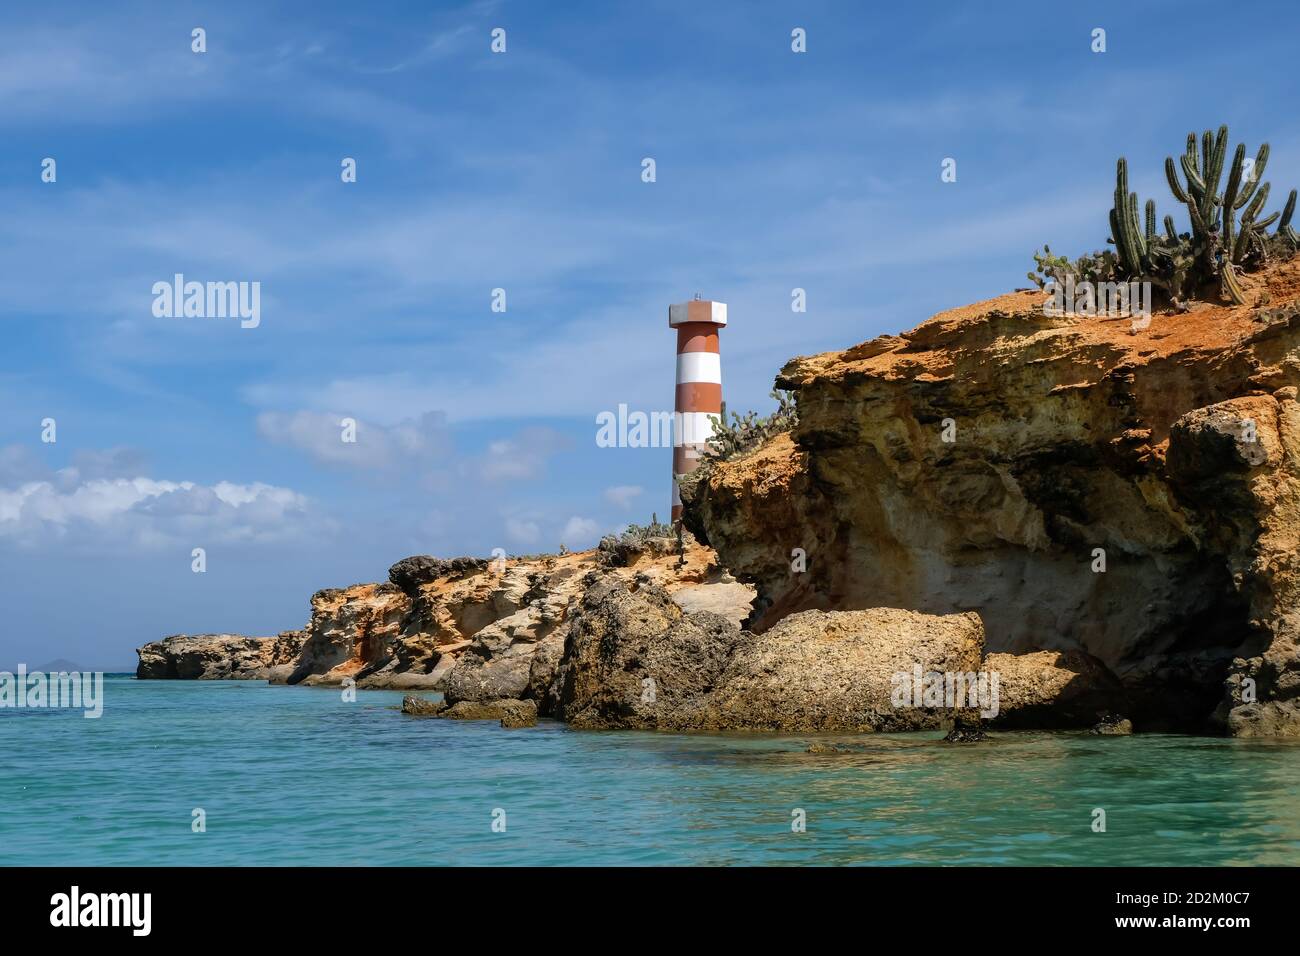 Coast seascape with rocks and a light house in Cubagua island (Venezuela). Stock Photo